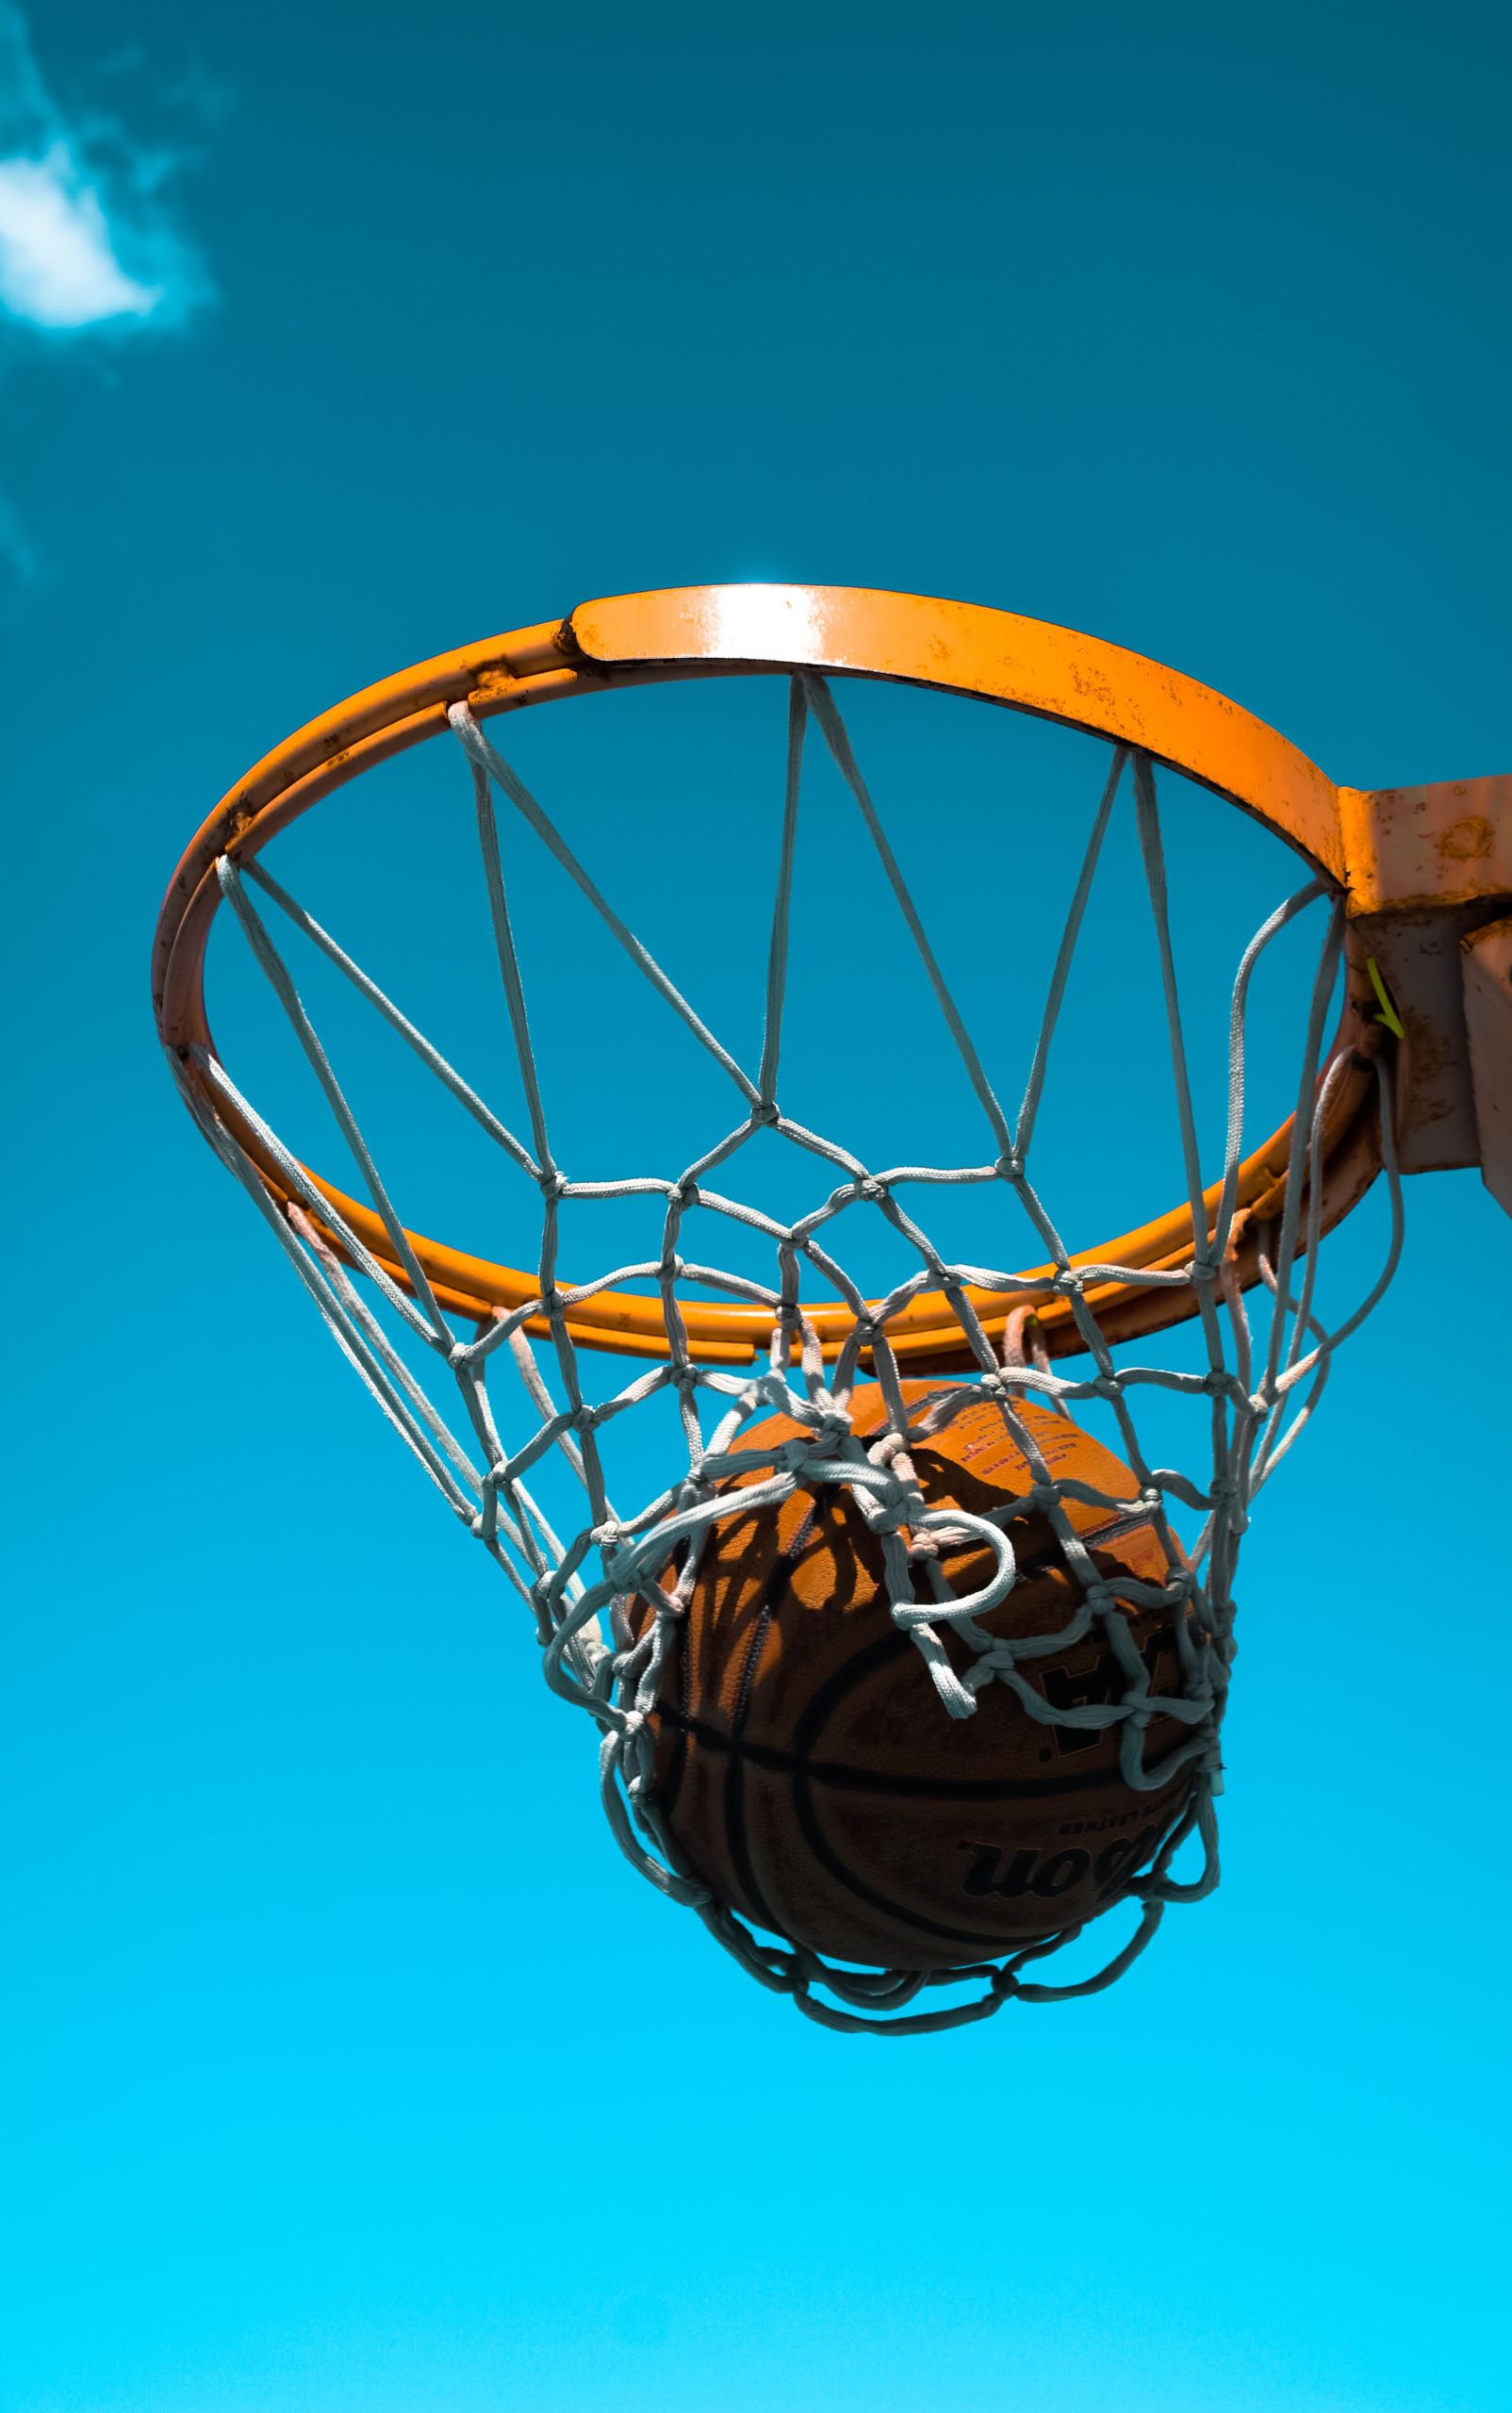 Basketball hoop with basketball going through